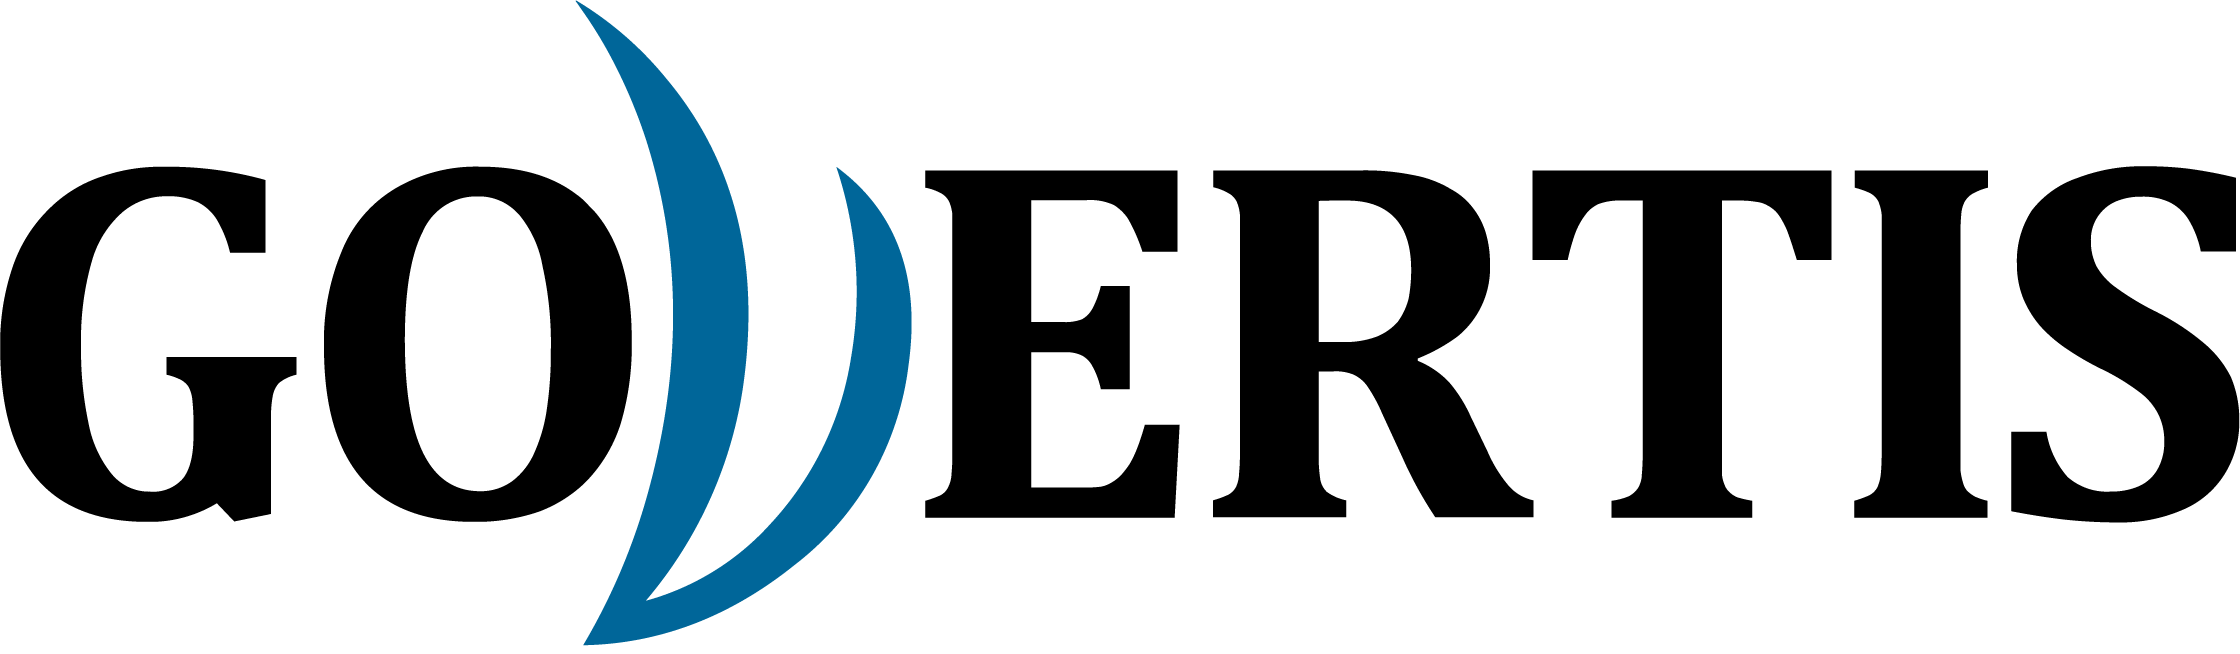 Logotipo Govertis Logotipo